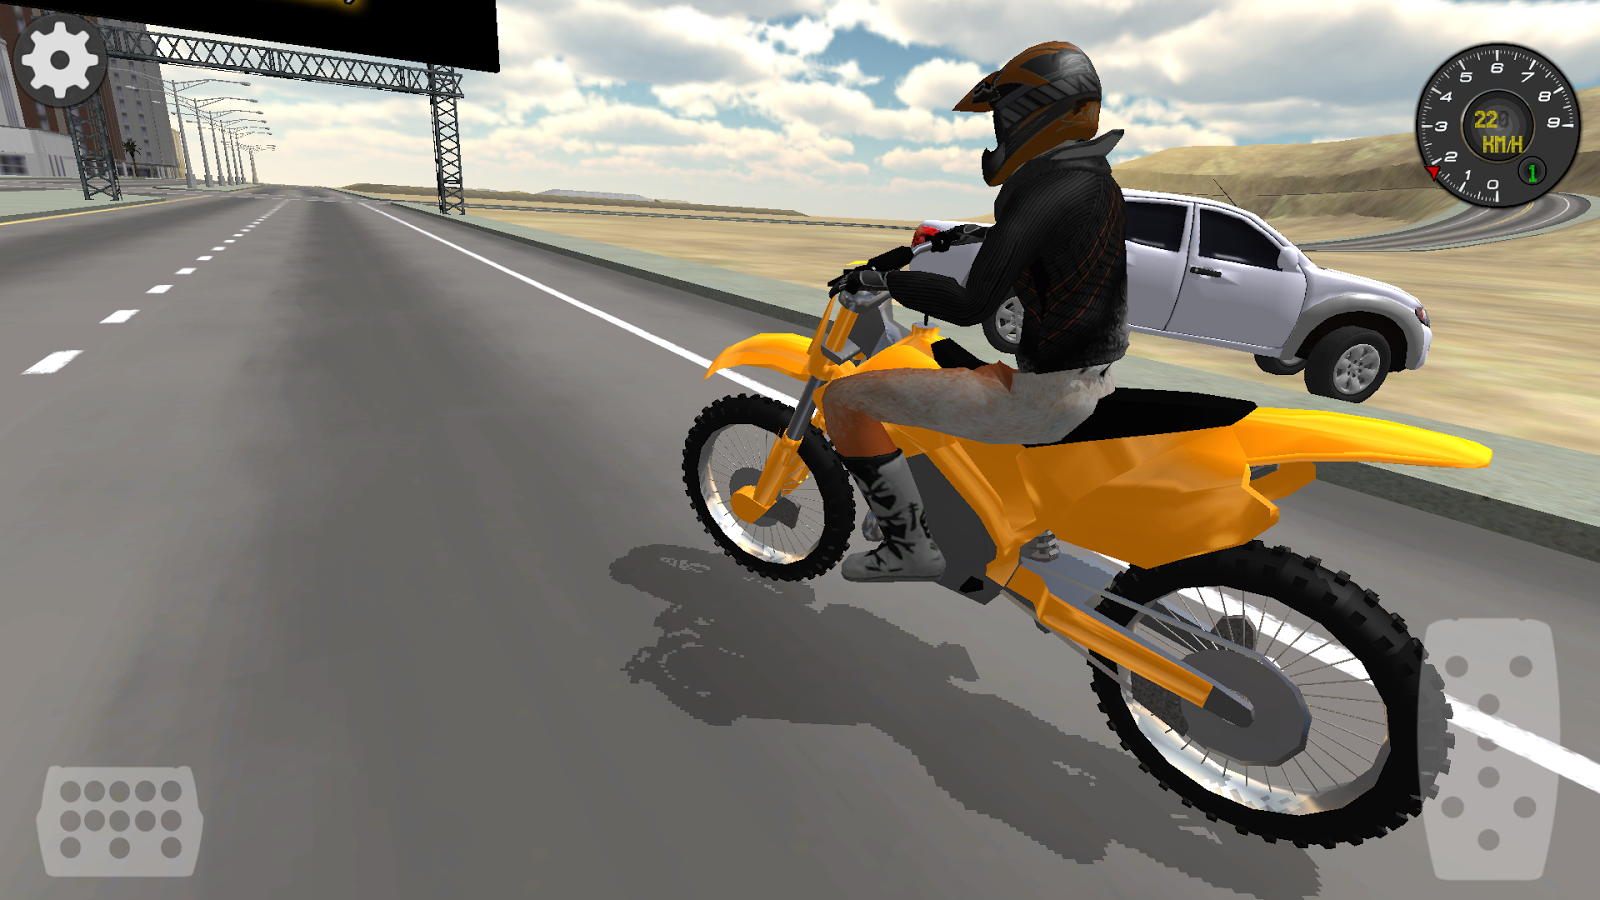 Motor Bike Crush Simulator 3D Android Apps On Google Play